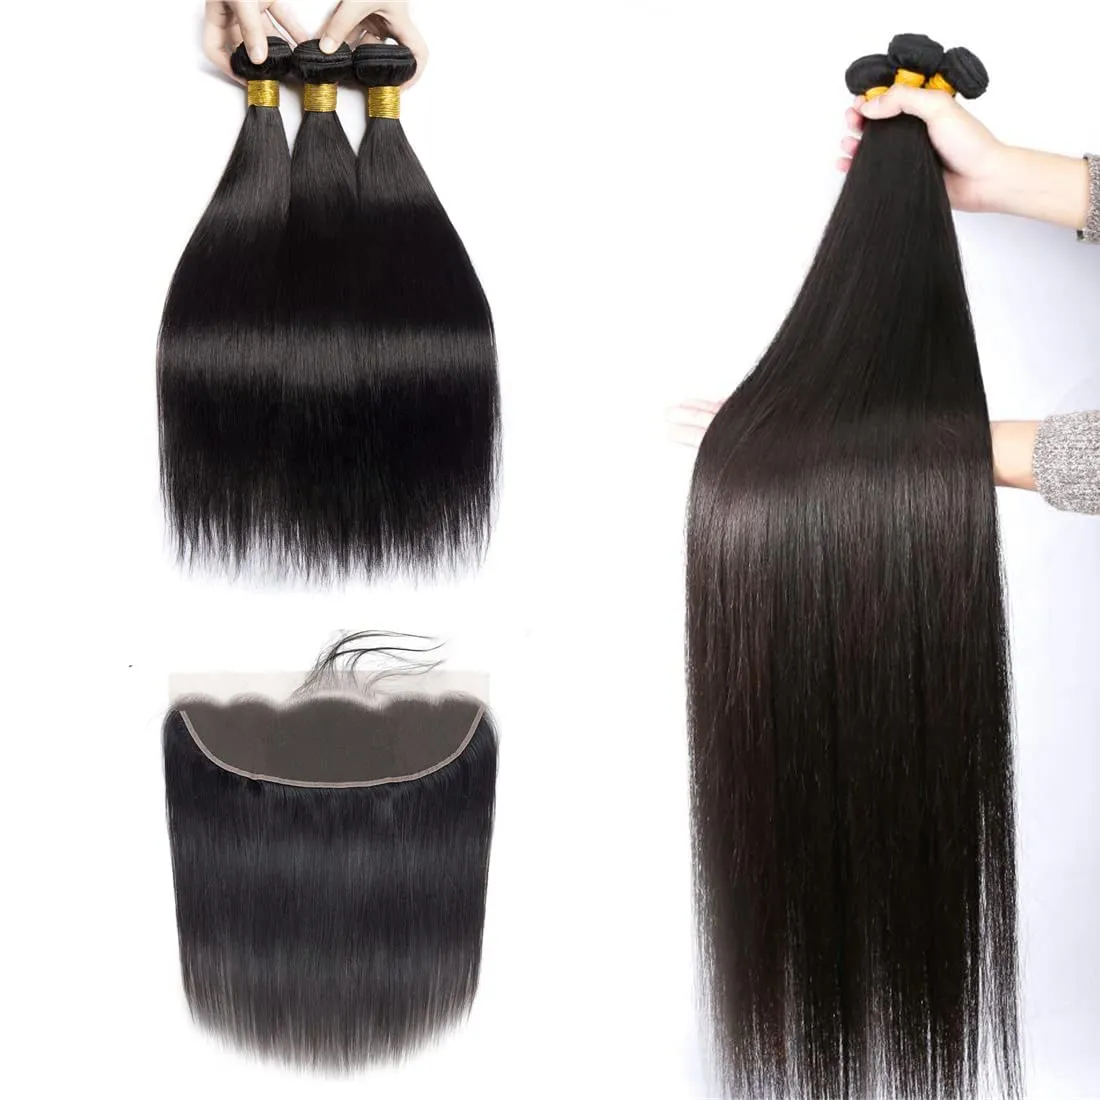 13X4 Lace Frontal With Hair Bundles Body Wave Brazilian Peruvian Indian Malaysian Virgin Human Hair Weaves Closure Natural Black Color 4pcs